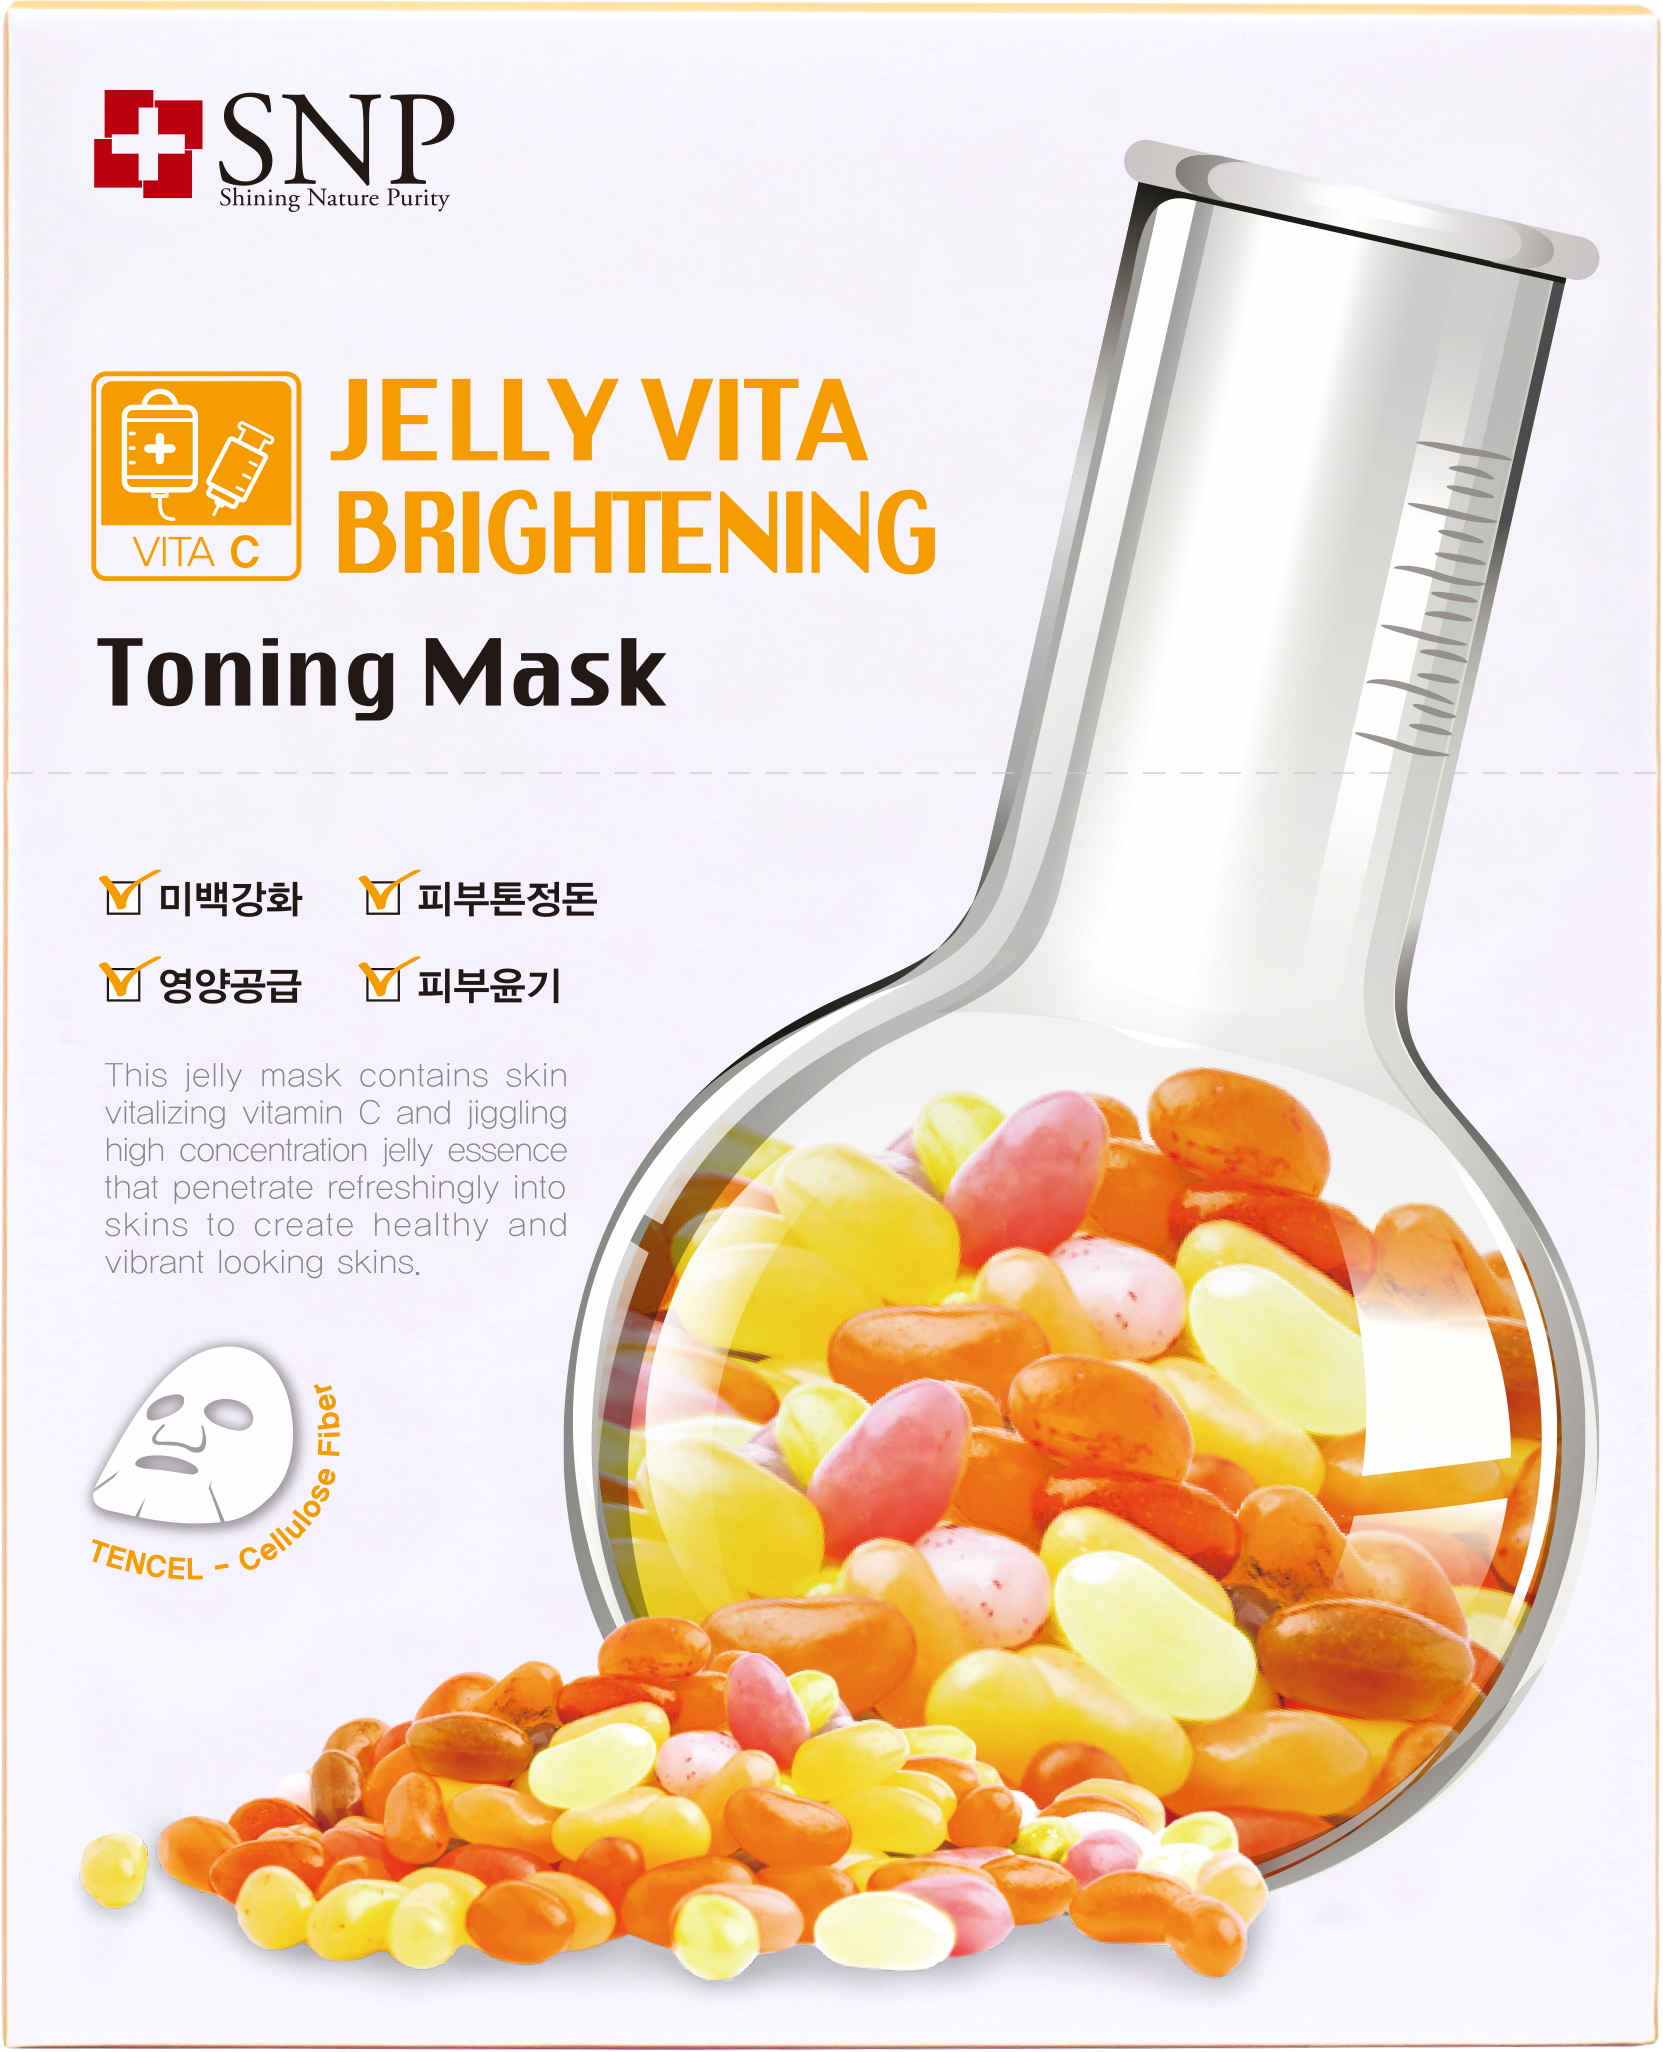 Vita tone. SNP маска. SNP маски для лица. SNP тканевая маска Jelly Vita Brightening Toning Mask с витамином с. Маска для лица СНП Jelly Vita.